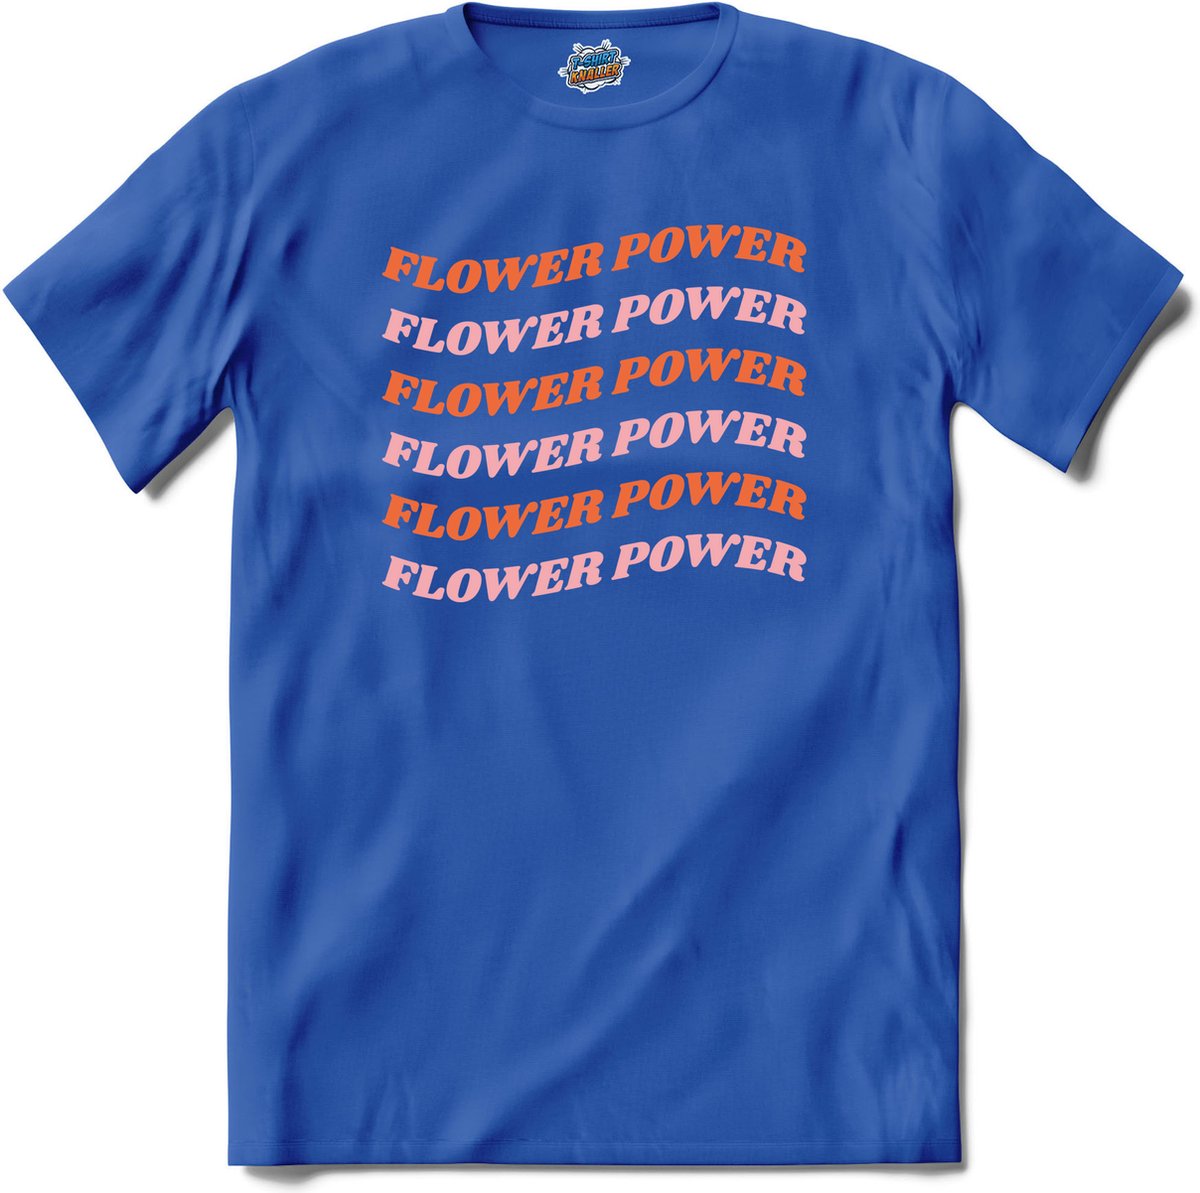 Flower power - T-Shirt - Jongens - Royal Blue - Maat 12 jaar